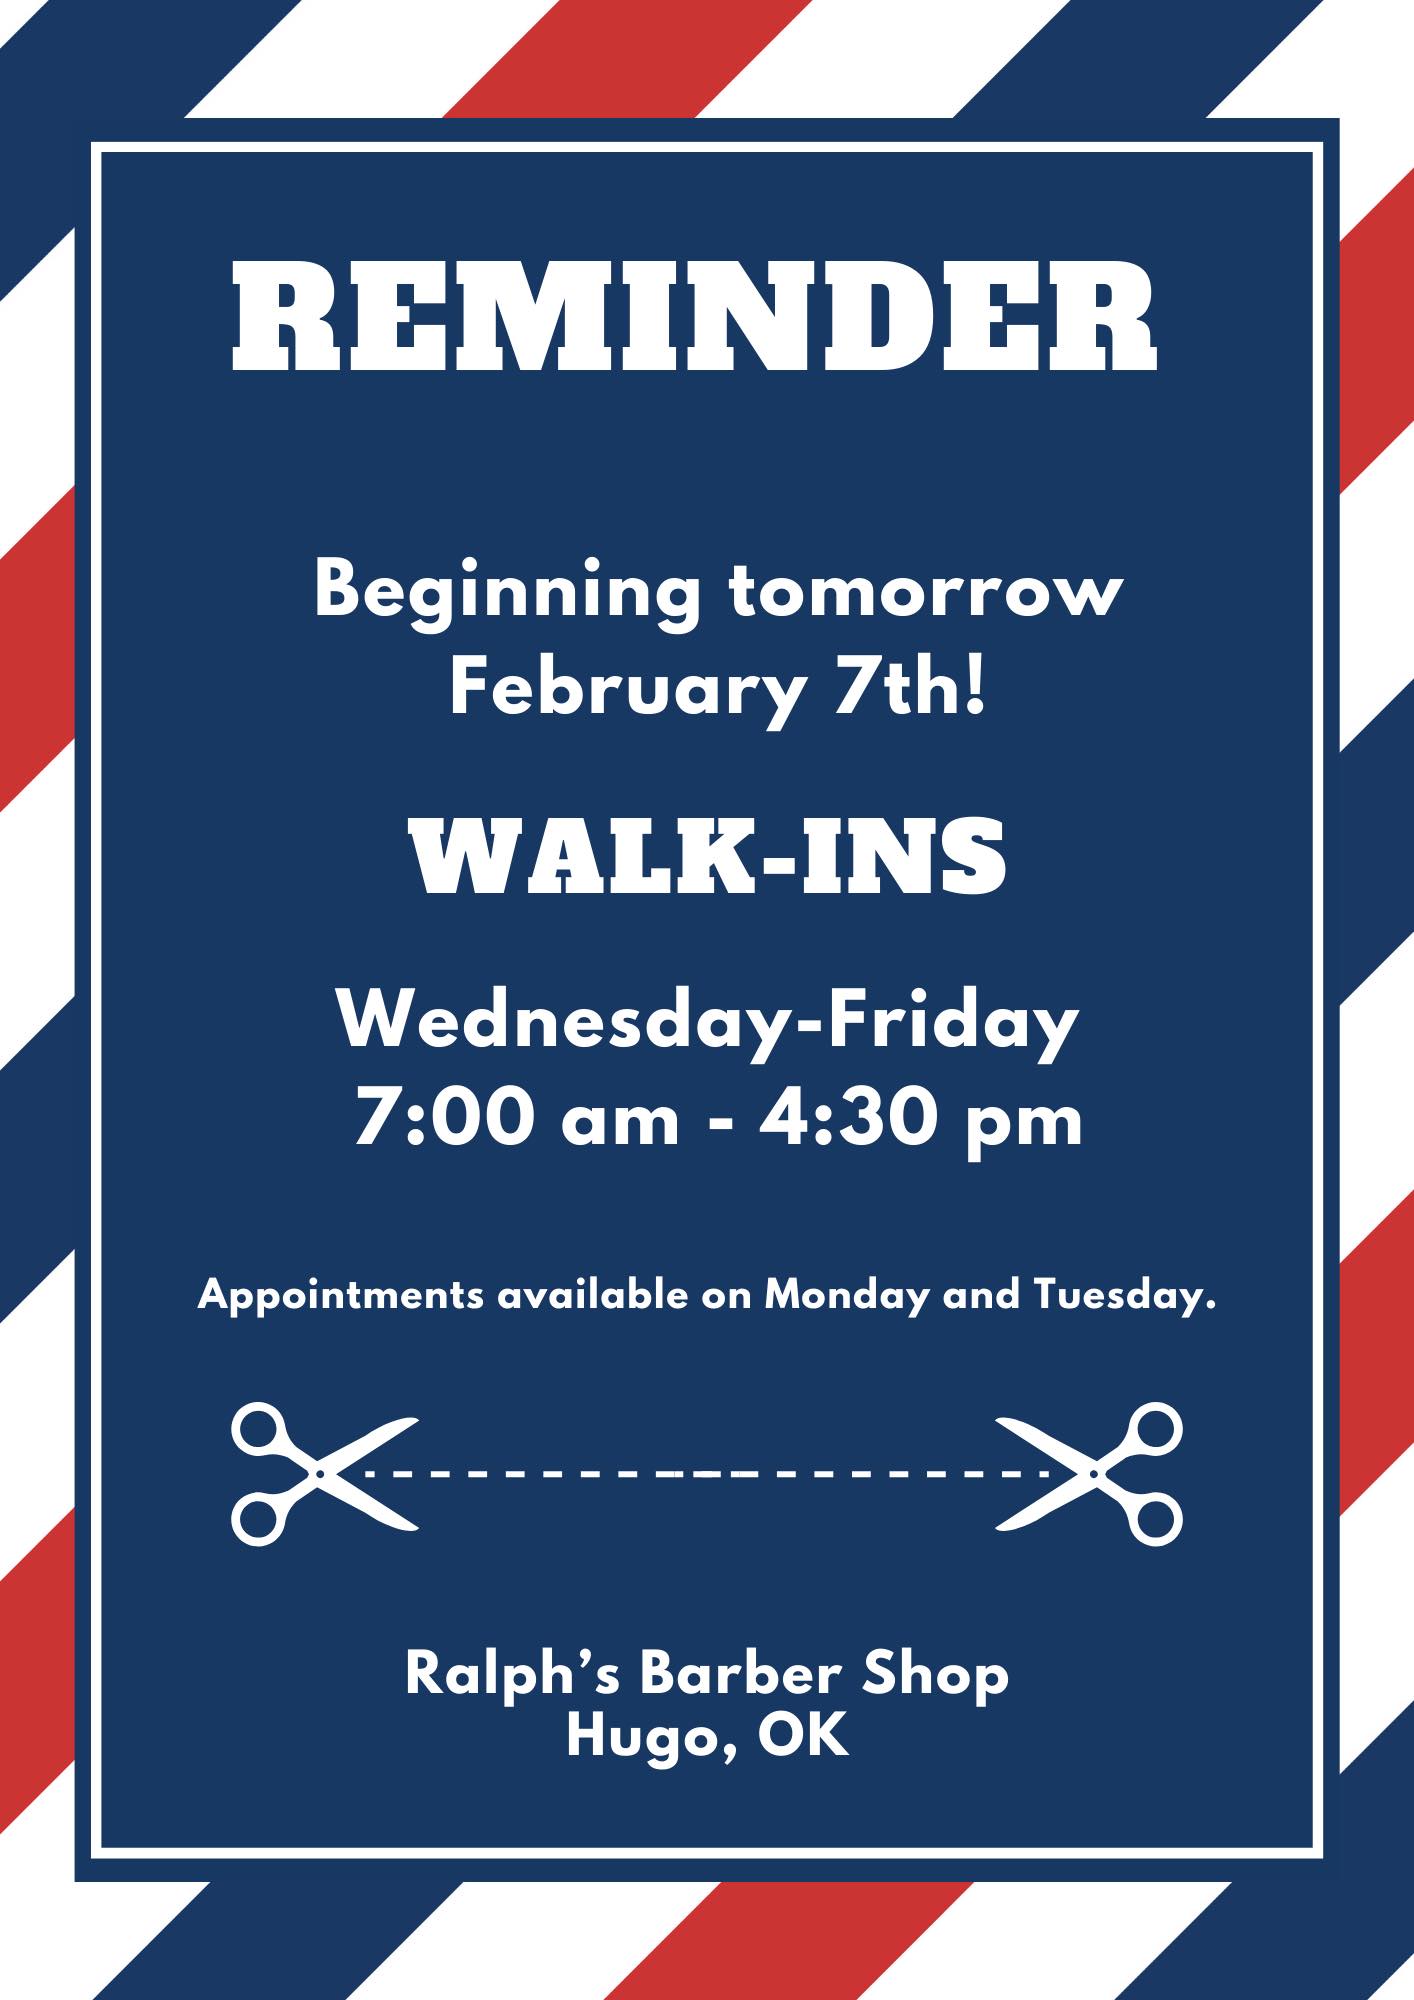 Ralph's Barber Shop 1314 E Jackson St, Hugo Oklahoma 74743